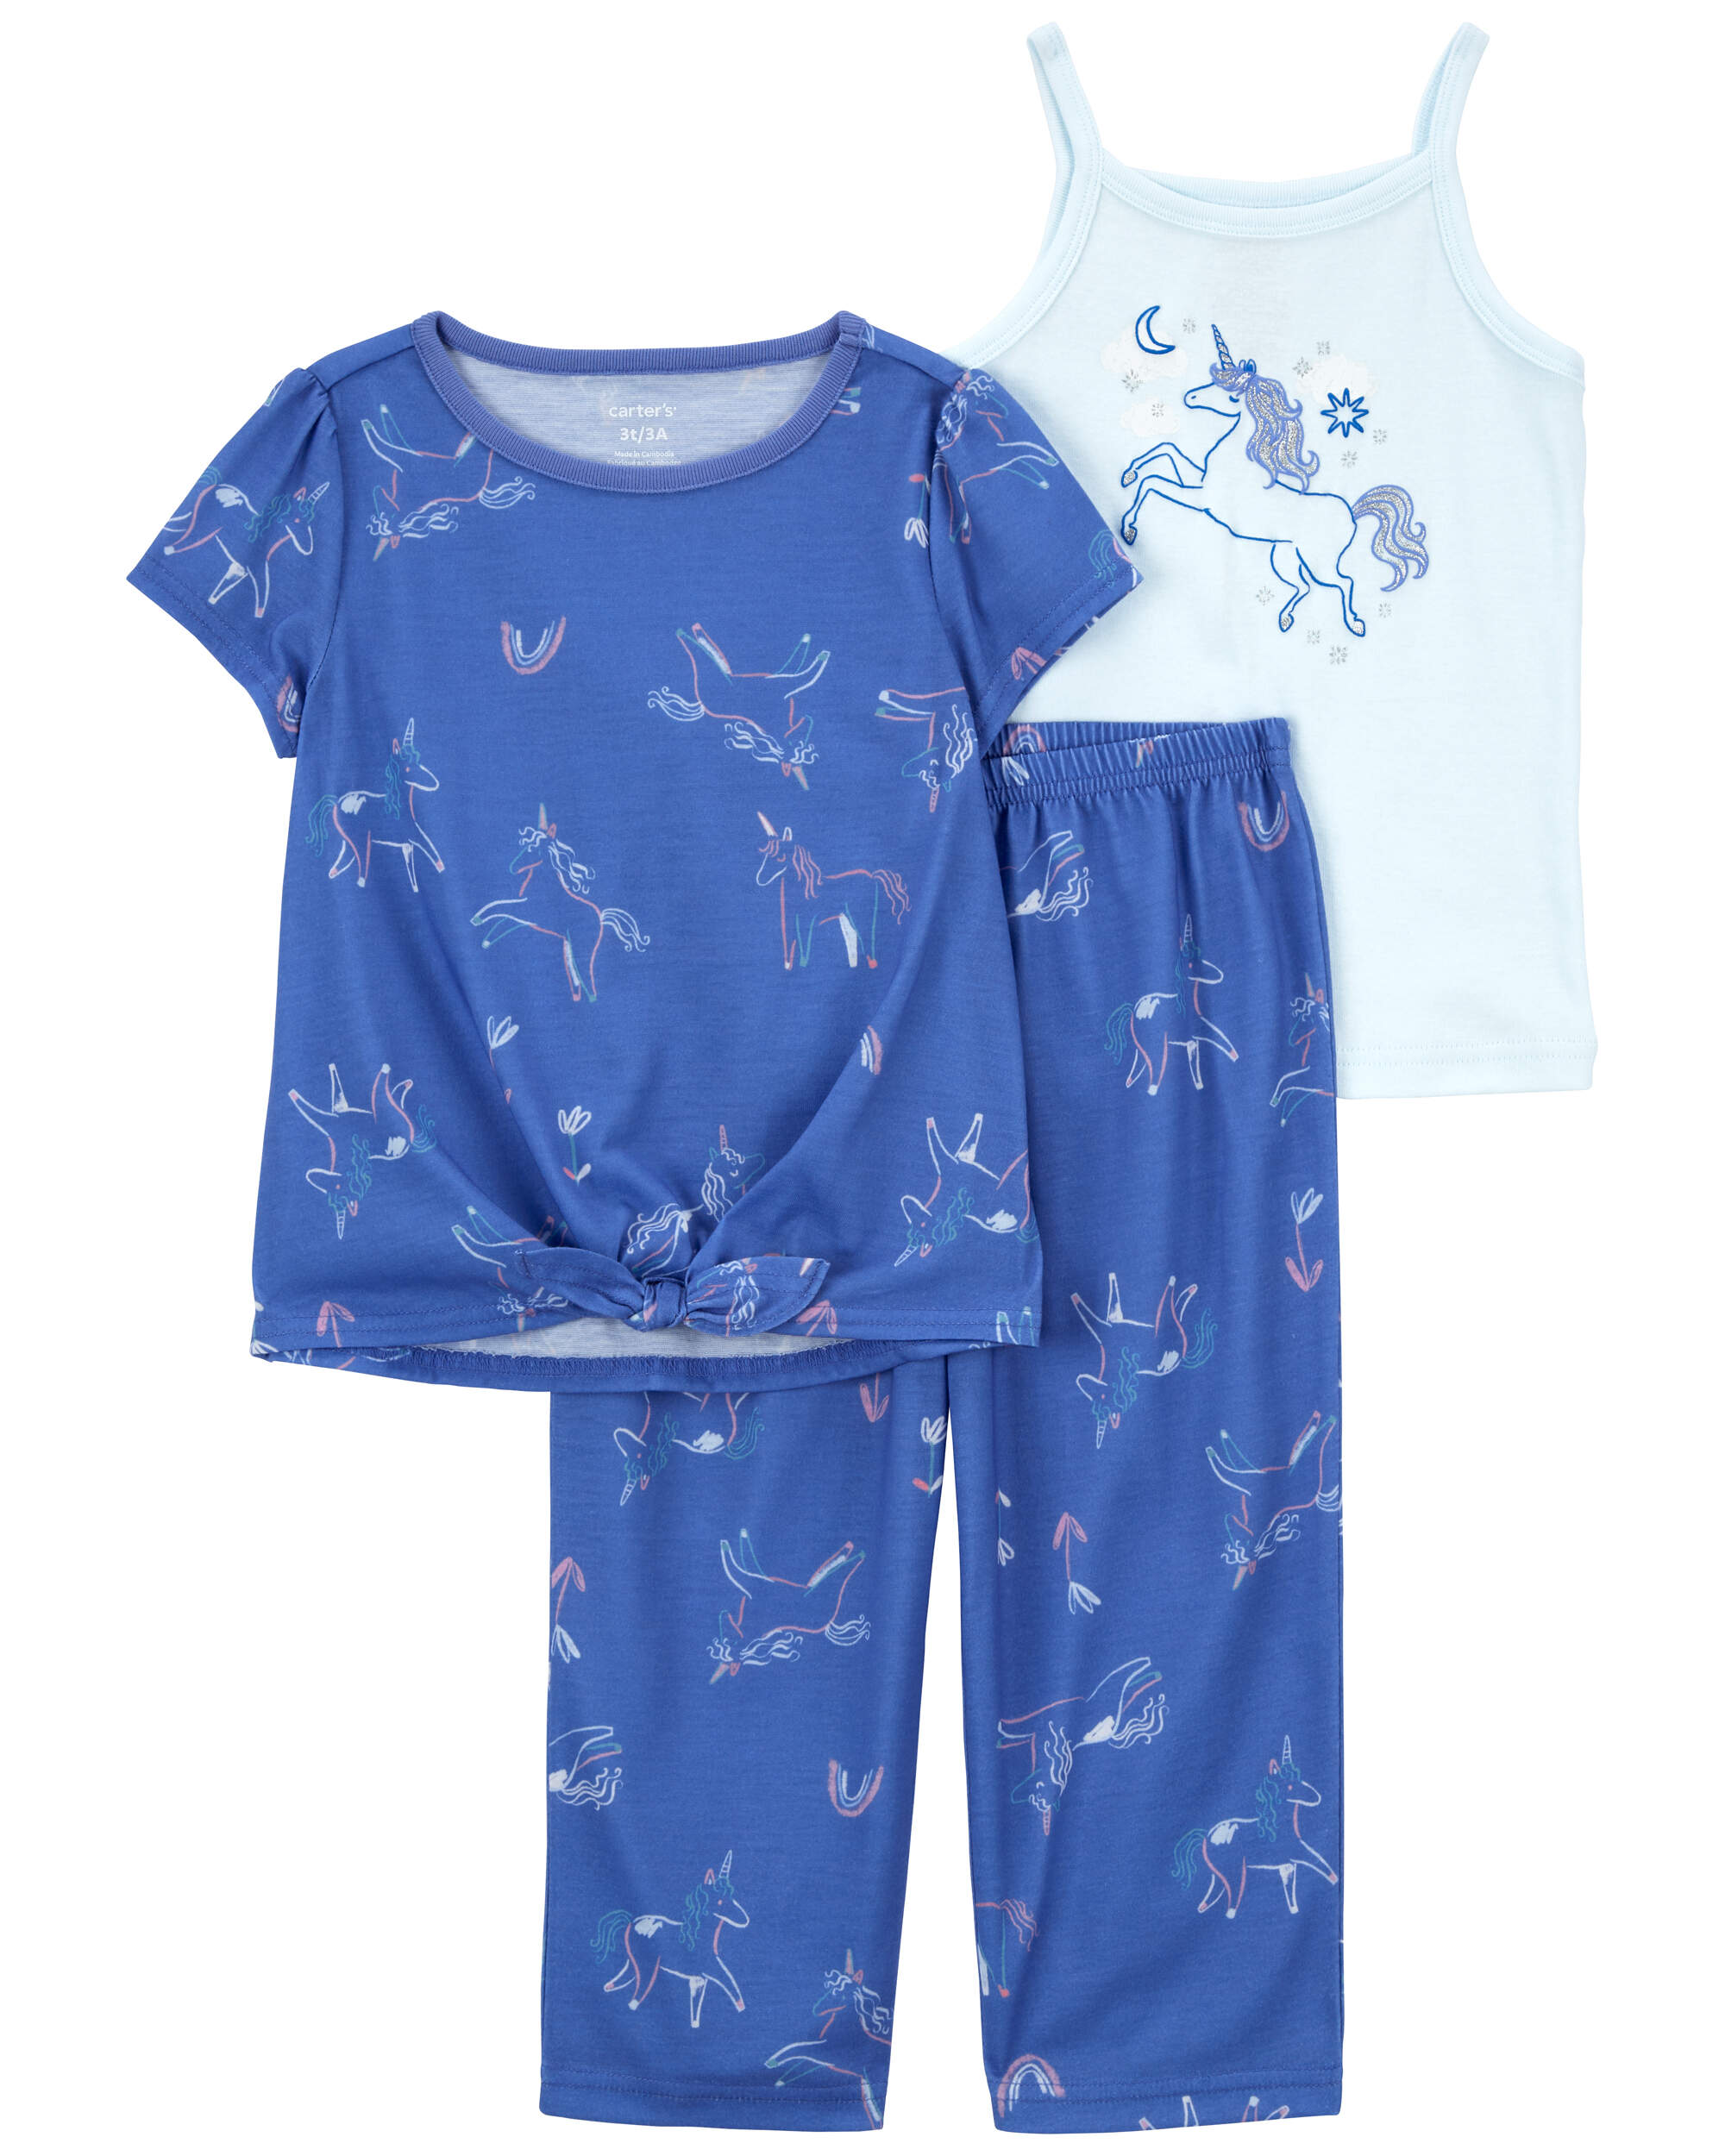 Toddler 3-Piece Unicorn Loose Fit Pyjamas